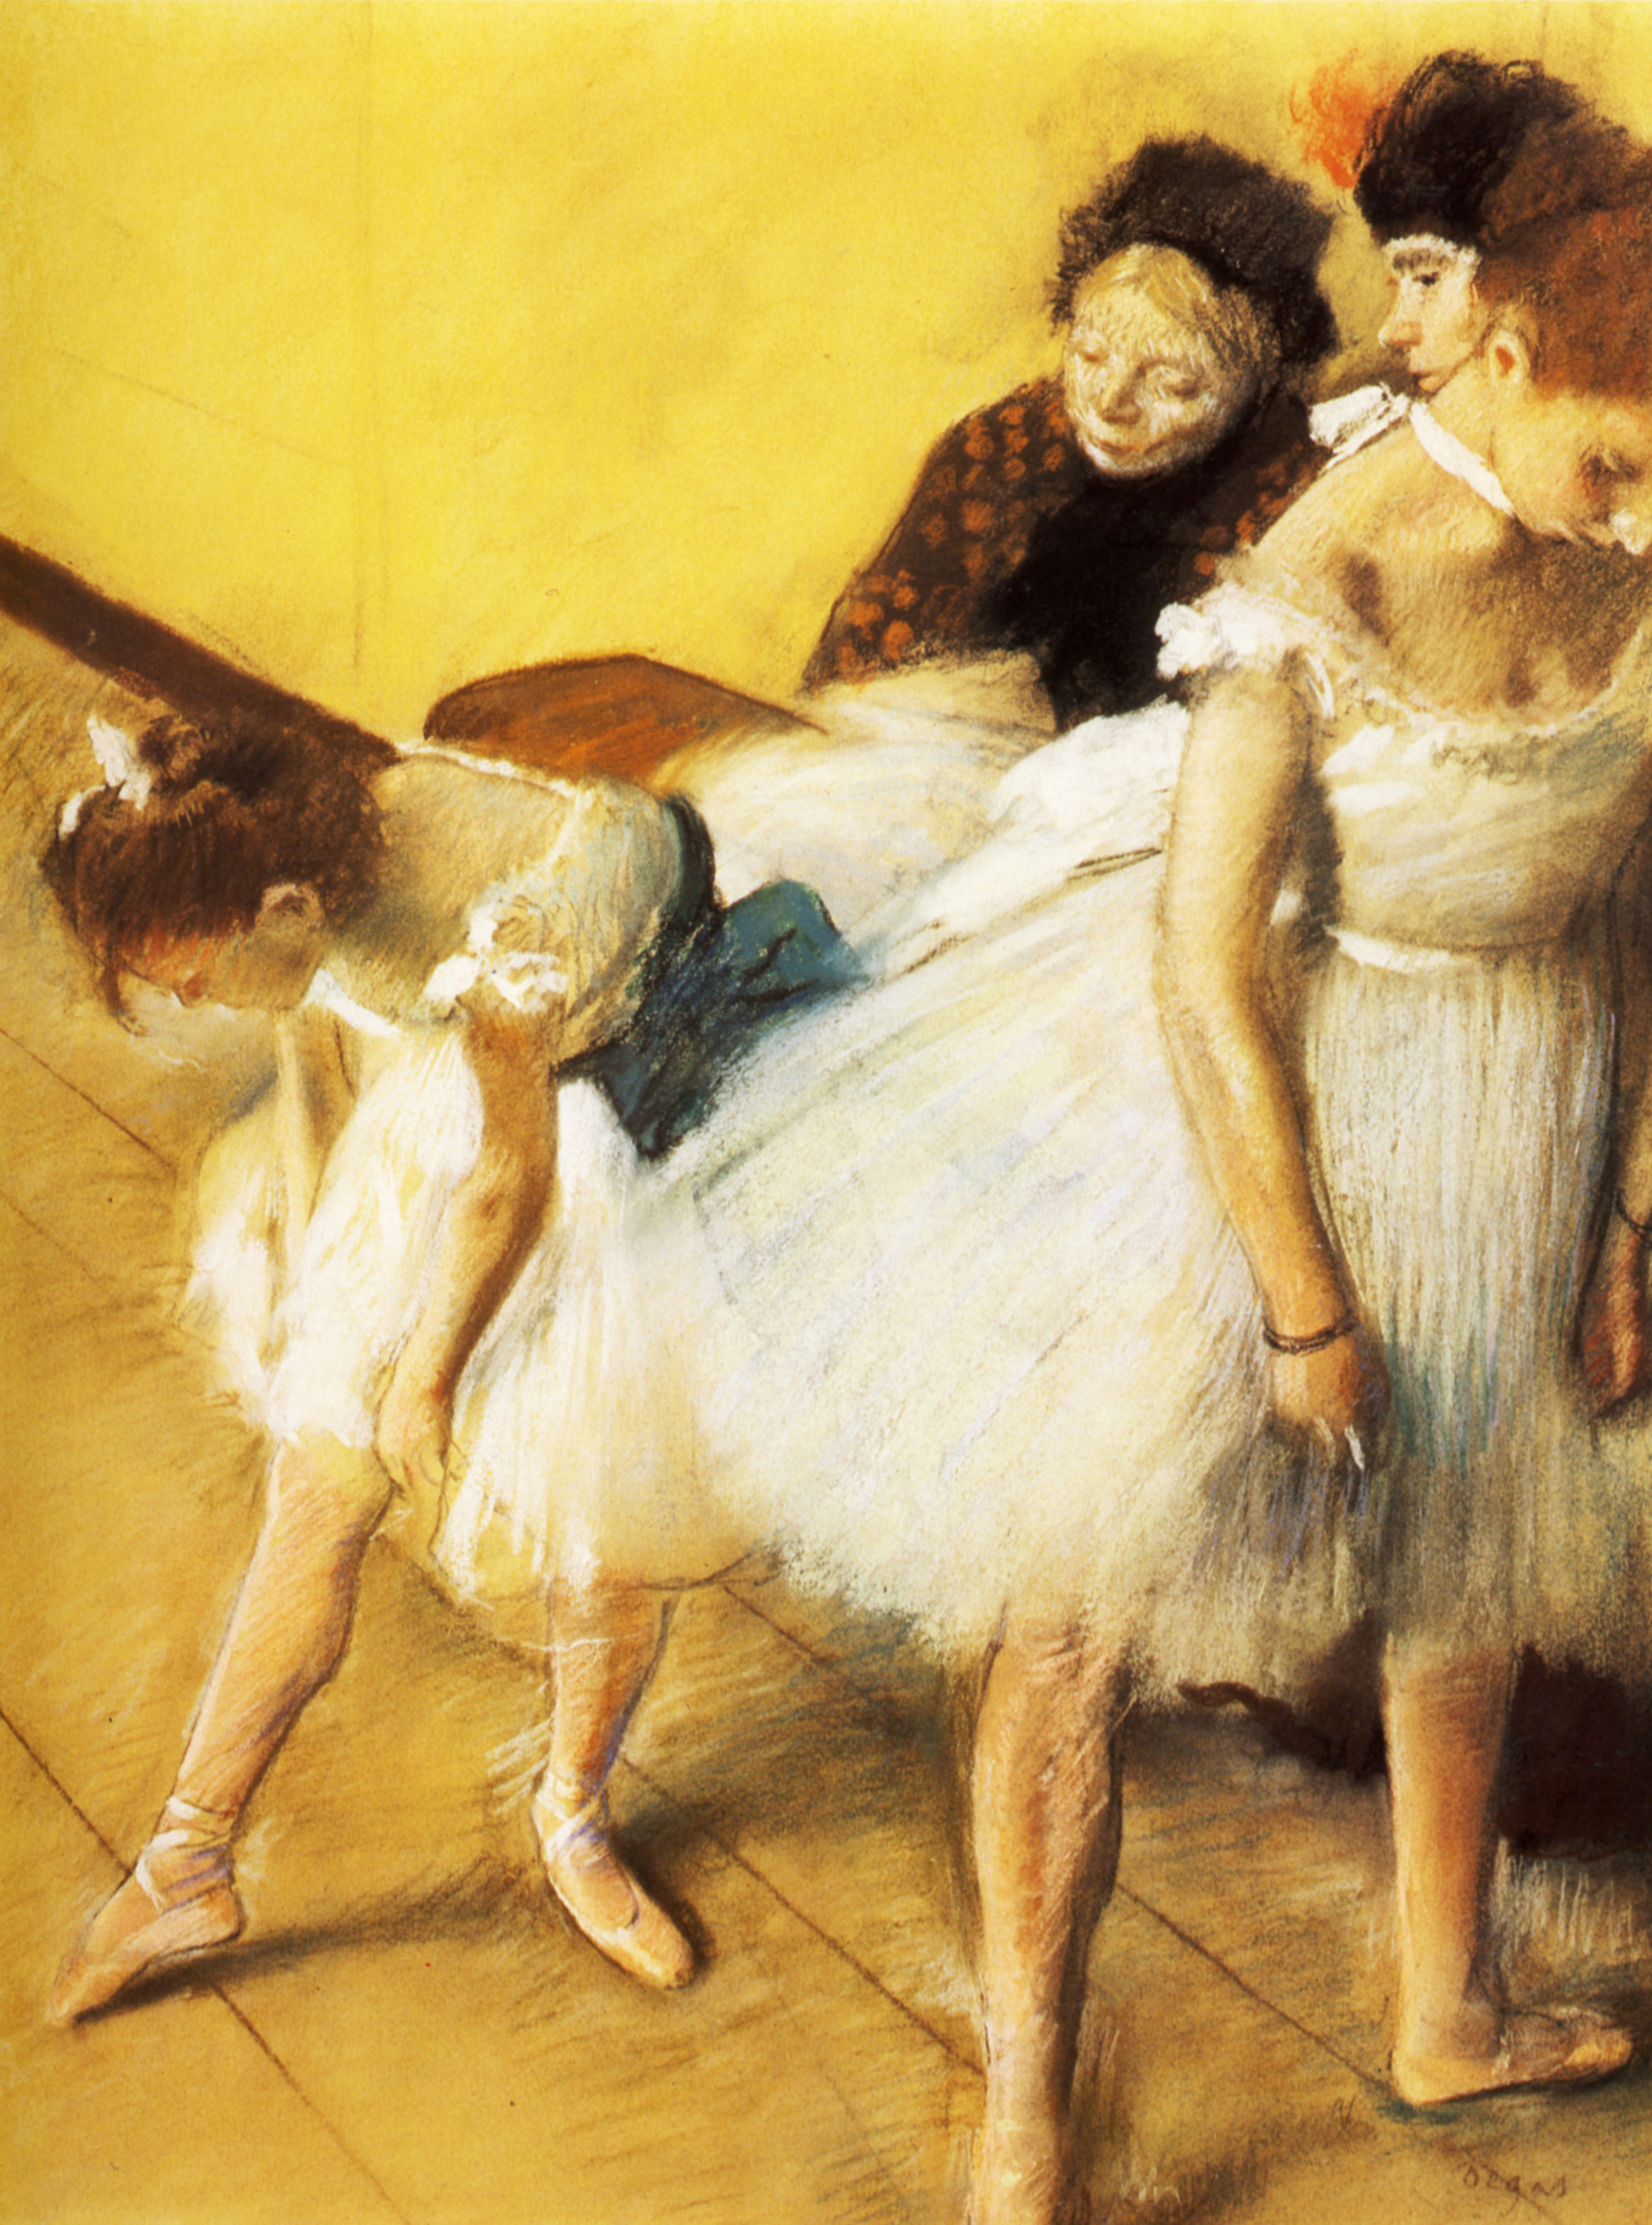 Examenul de dans by Edgar Degas - 1880 - 63.4 x 48.2 cm 